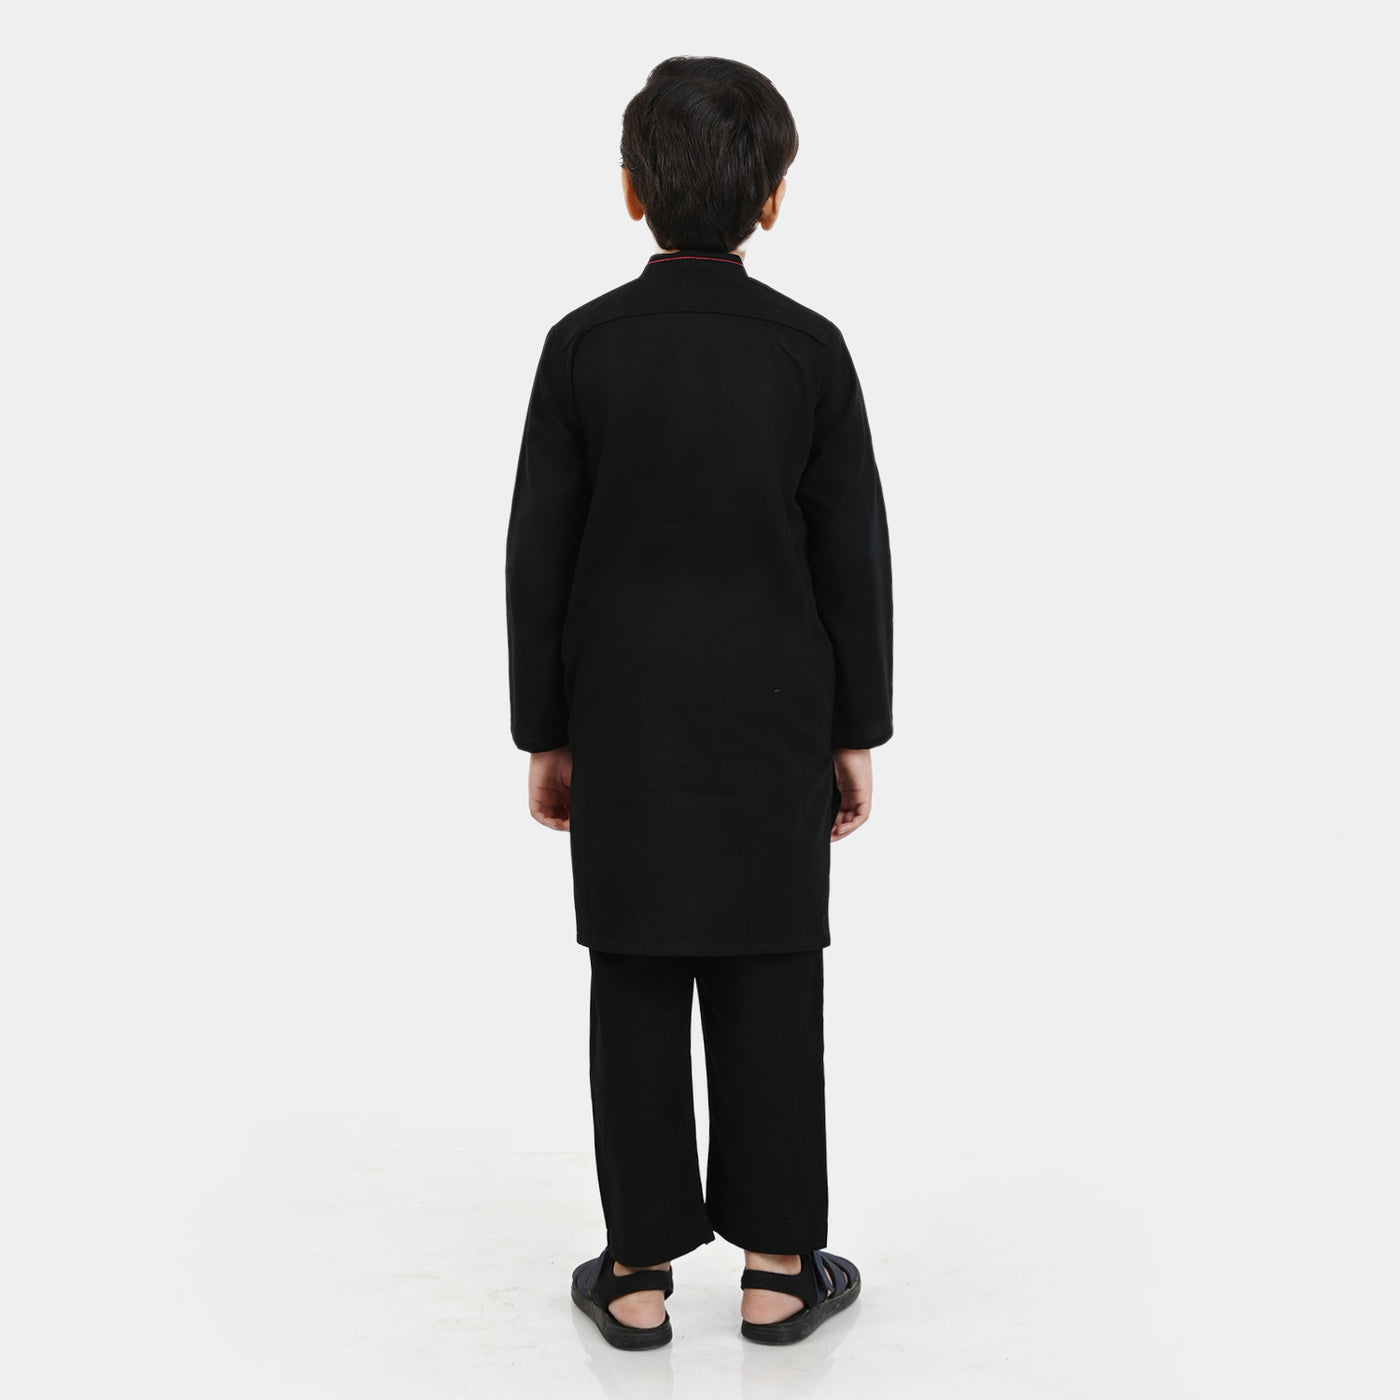 Boys khaddar 2 piece suit Embroidered-BLACK